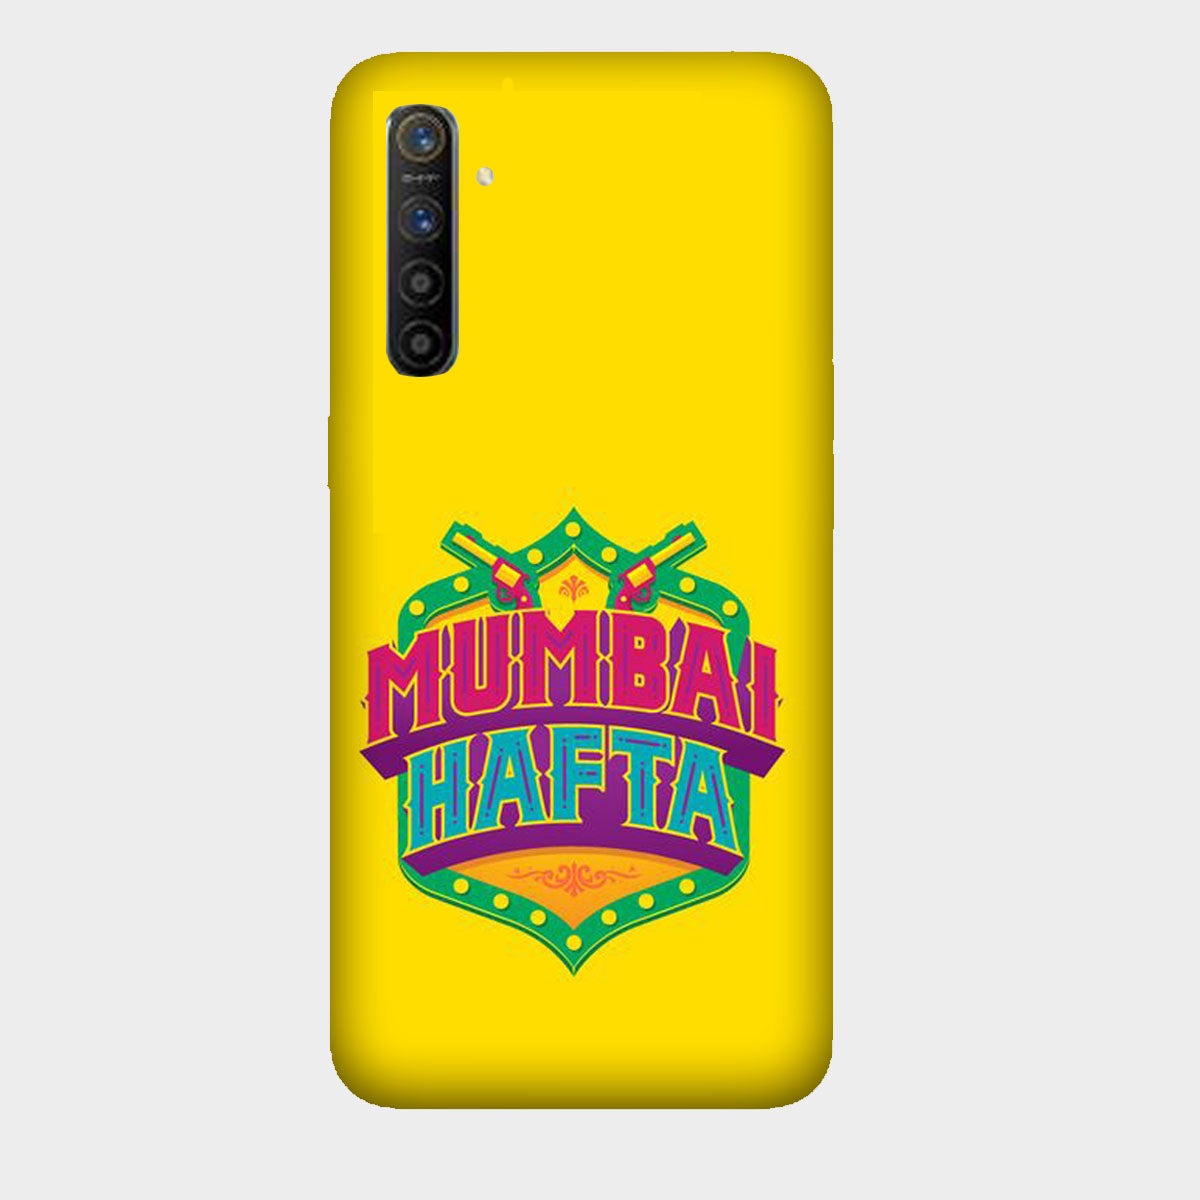 Mumbai Hafta - Mobile Phone Cover - Hard Case